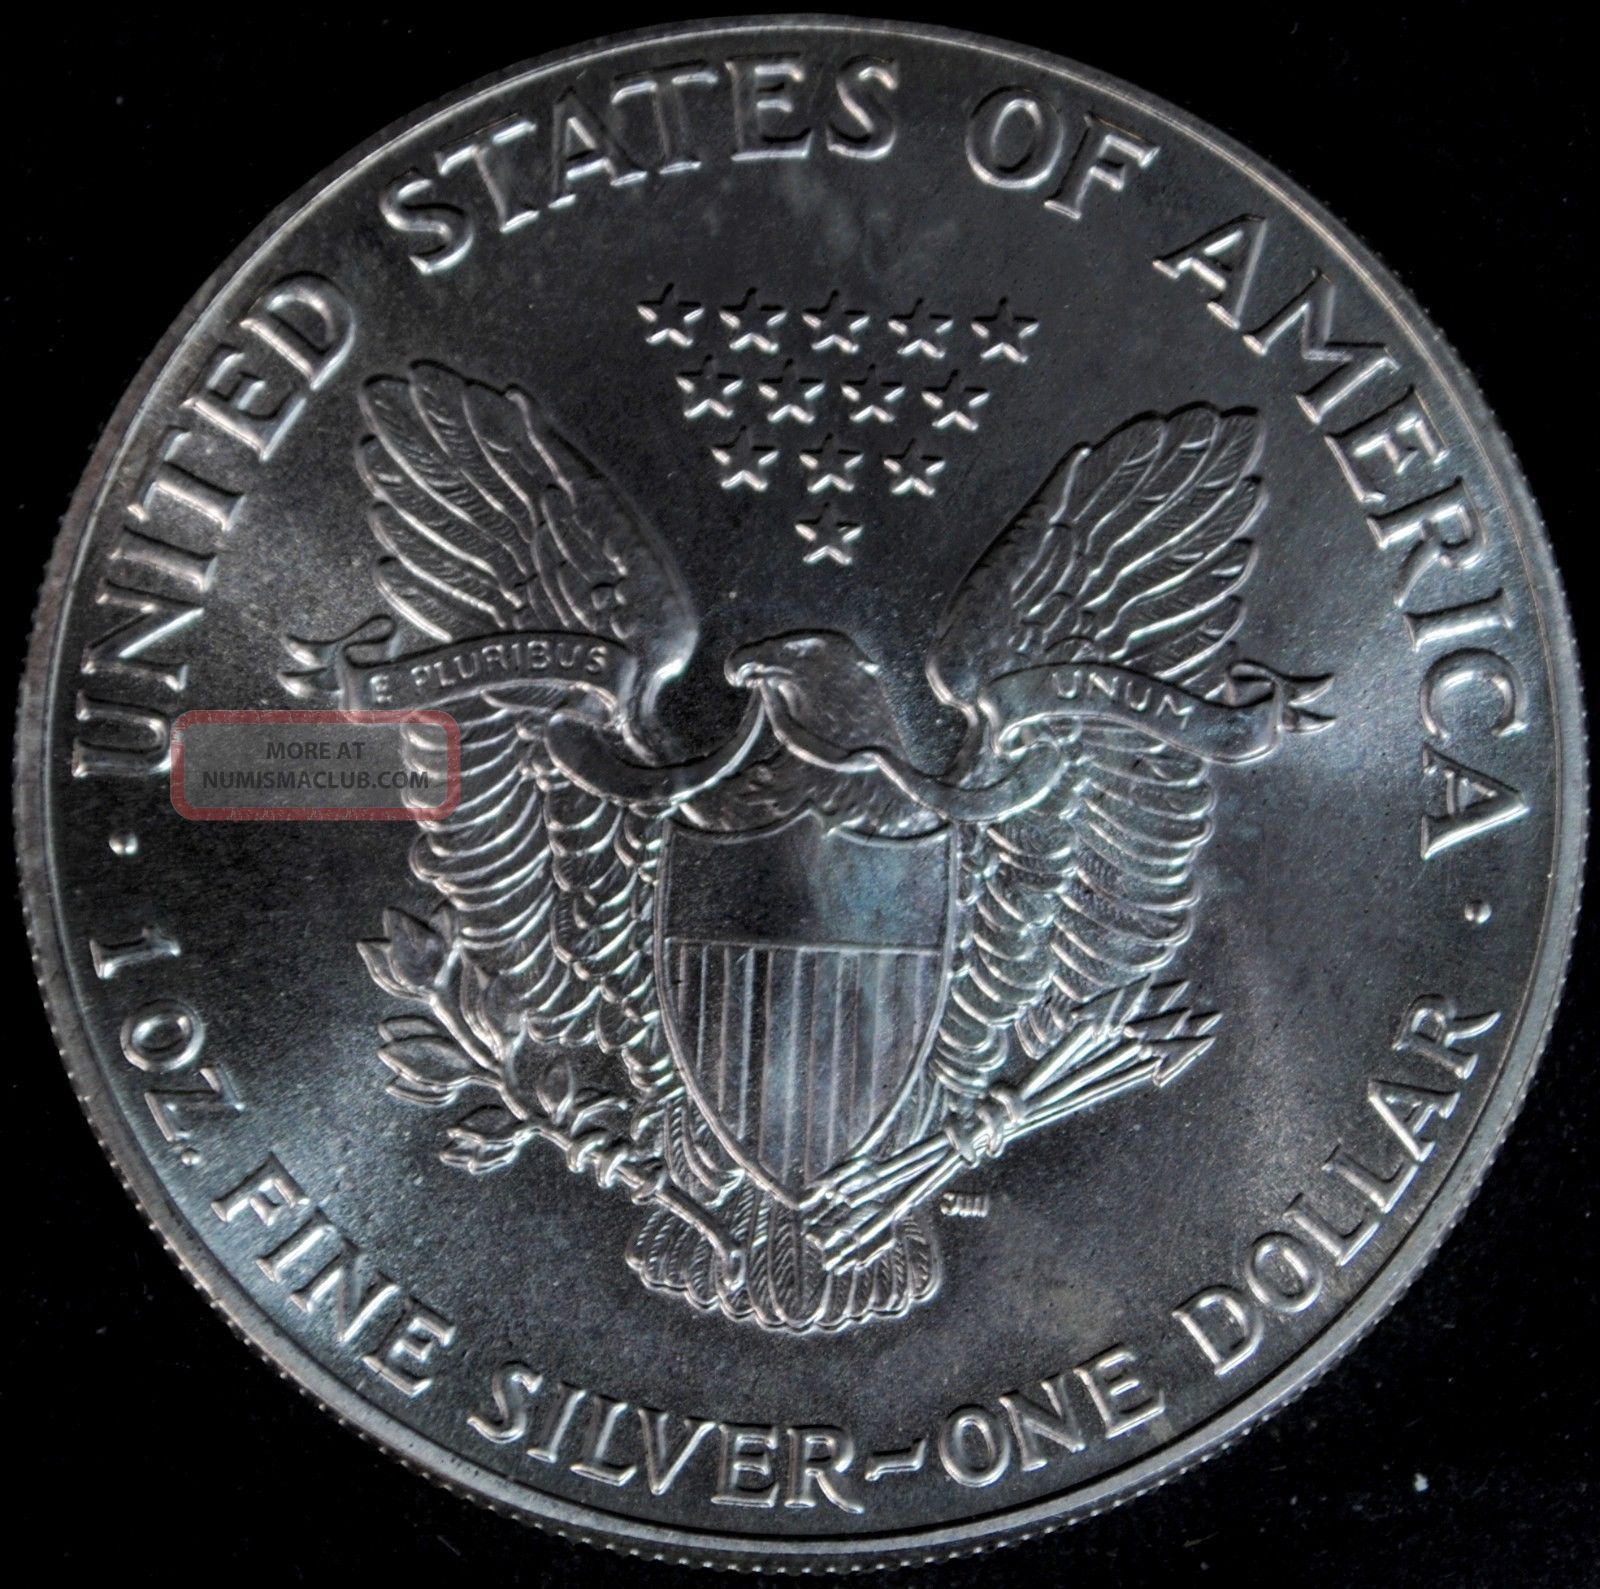 Arriba 105+ Foto 1 Oz. Fine Silver One Dollar Cena Hermosa